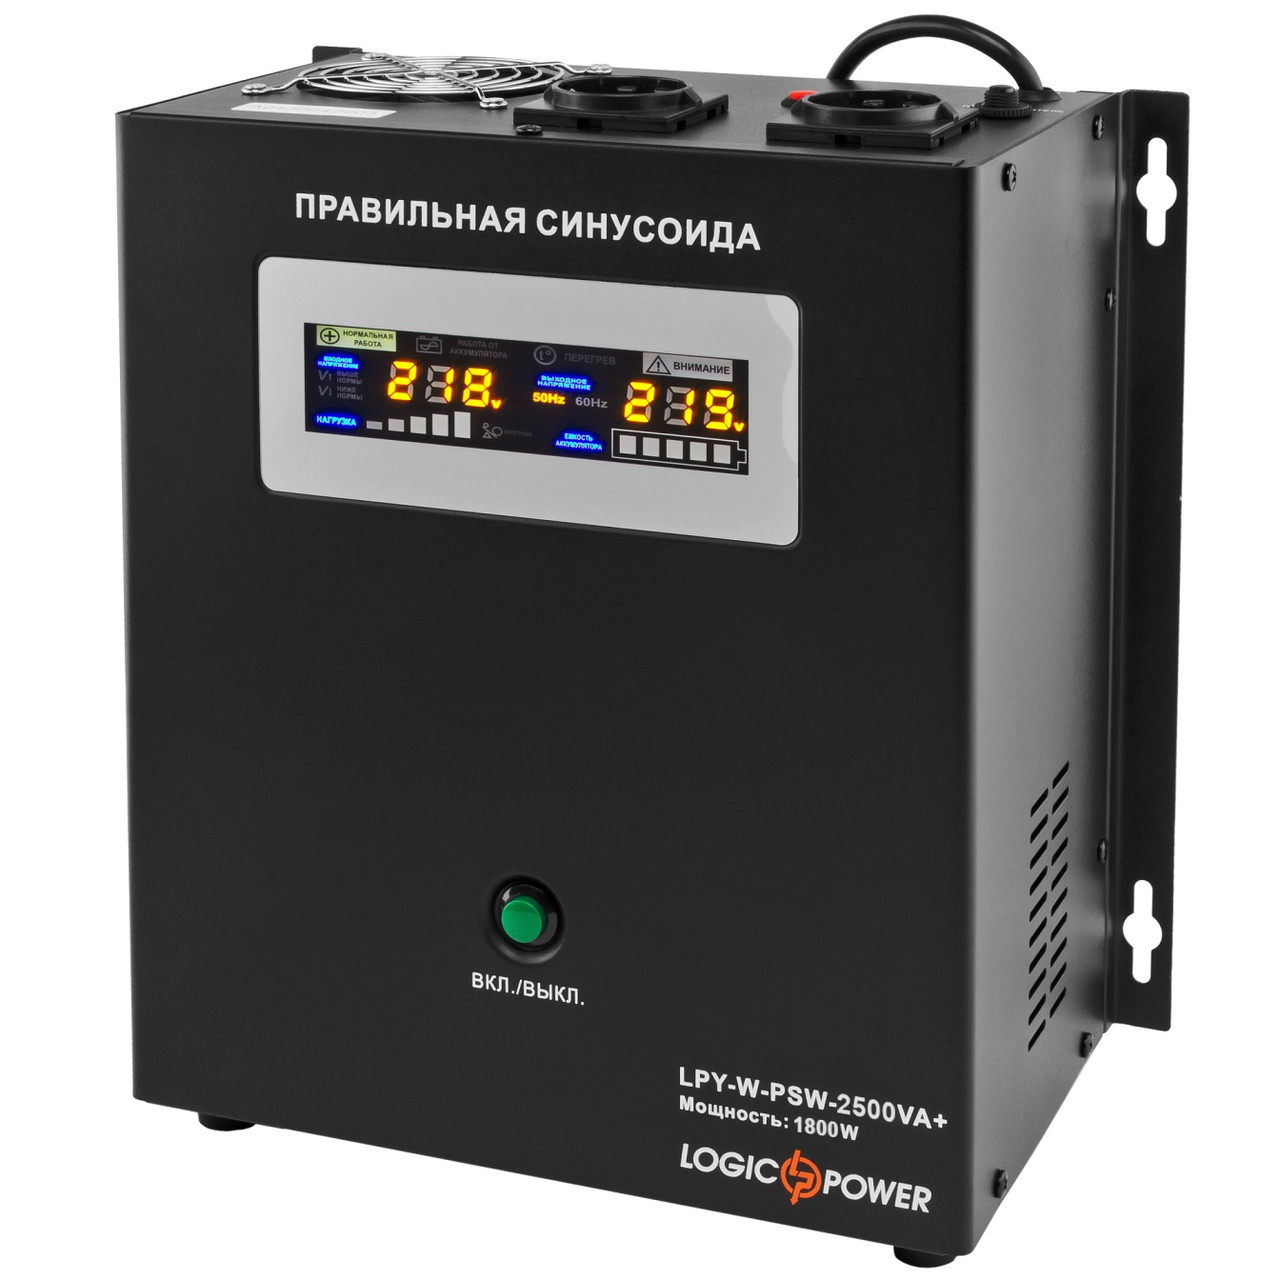 ДБЖ LogicPower LPY-W-PSW-2500VA+(1800 Вт)10A/20A, Lin.int., AVR, 2 x євро, USB, LCD, метал